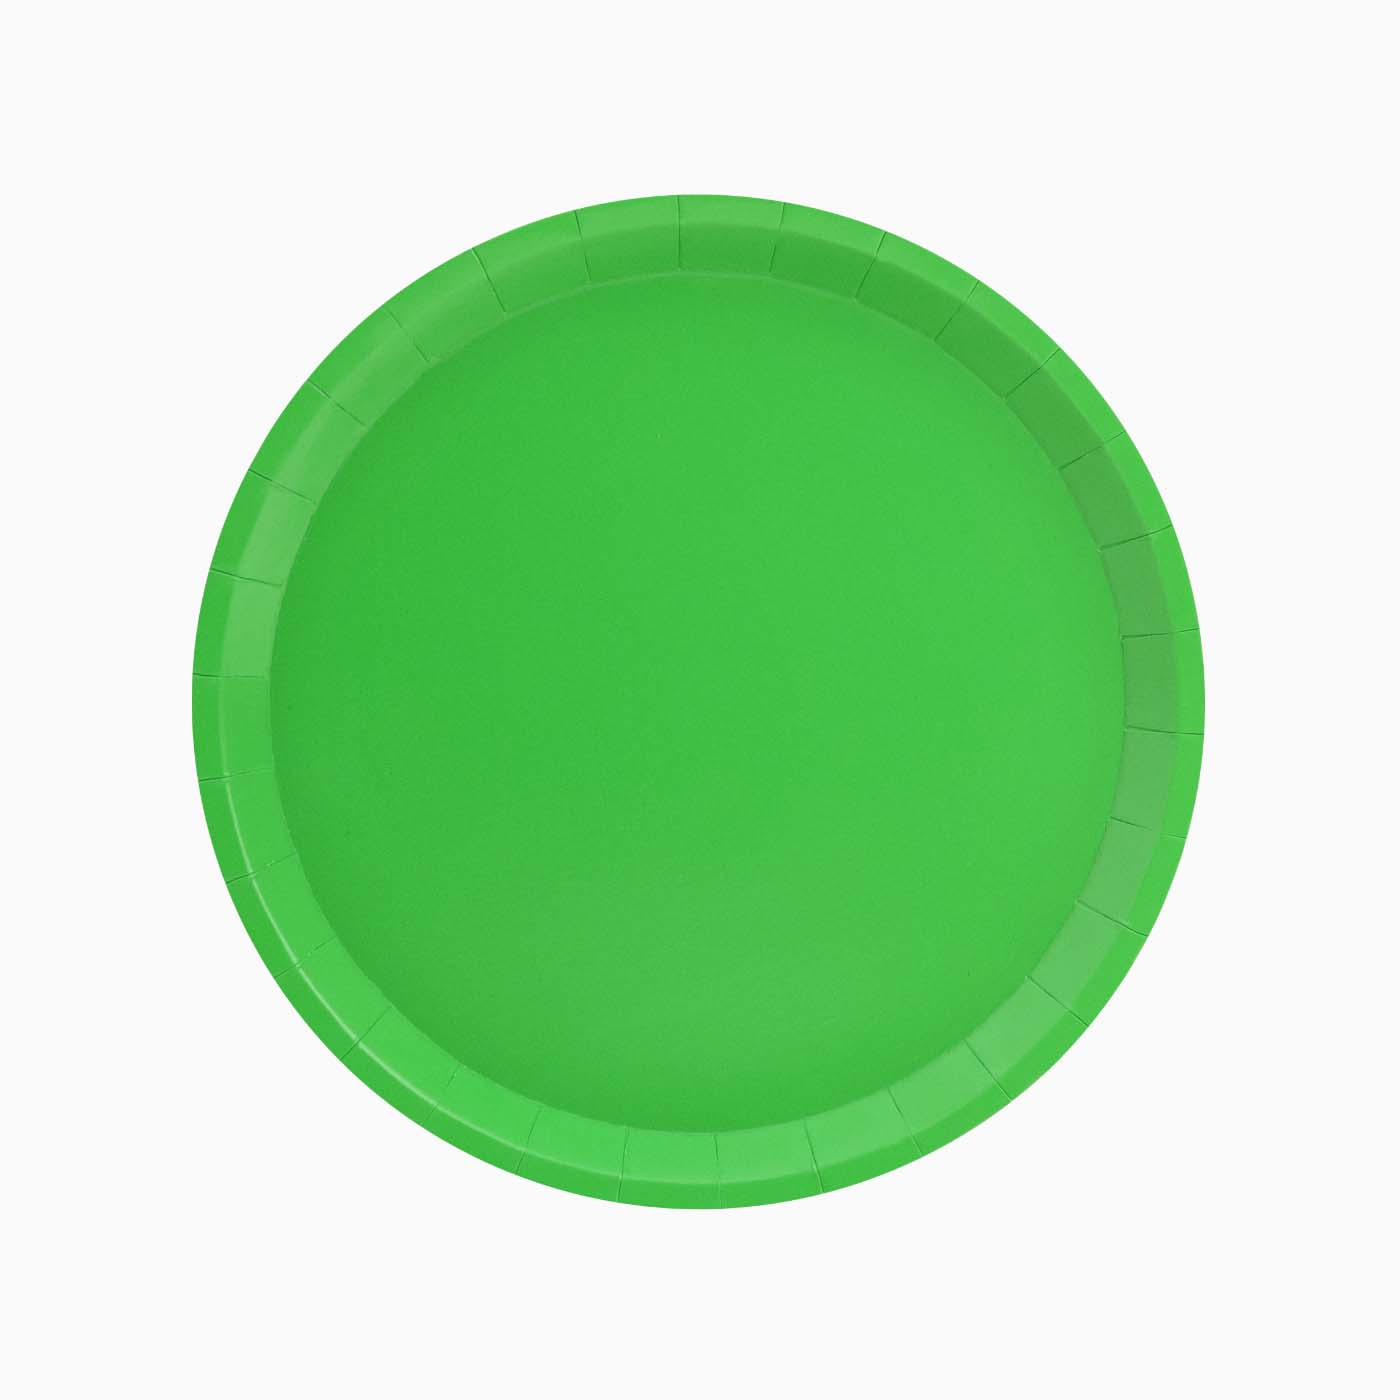 Biodegradable round flat plate